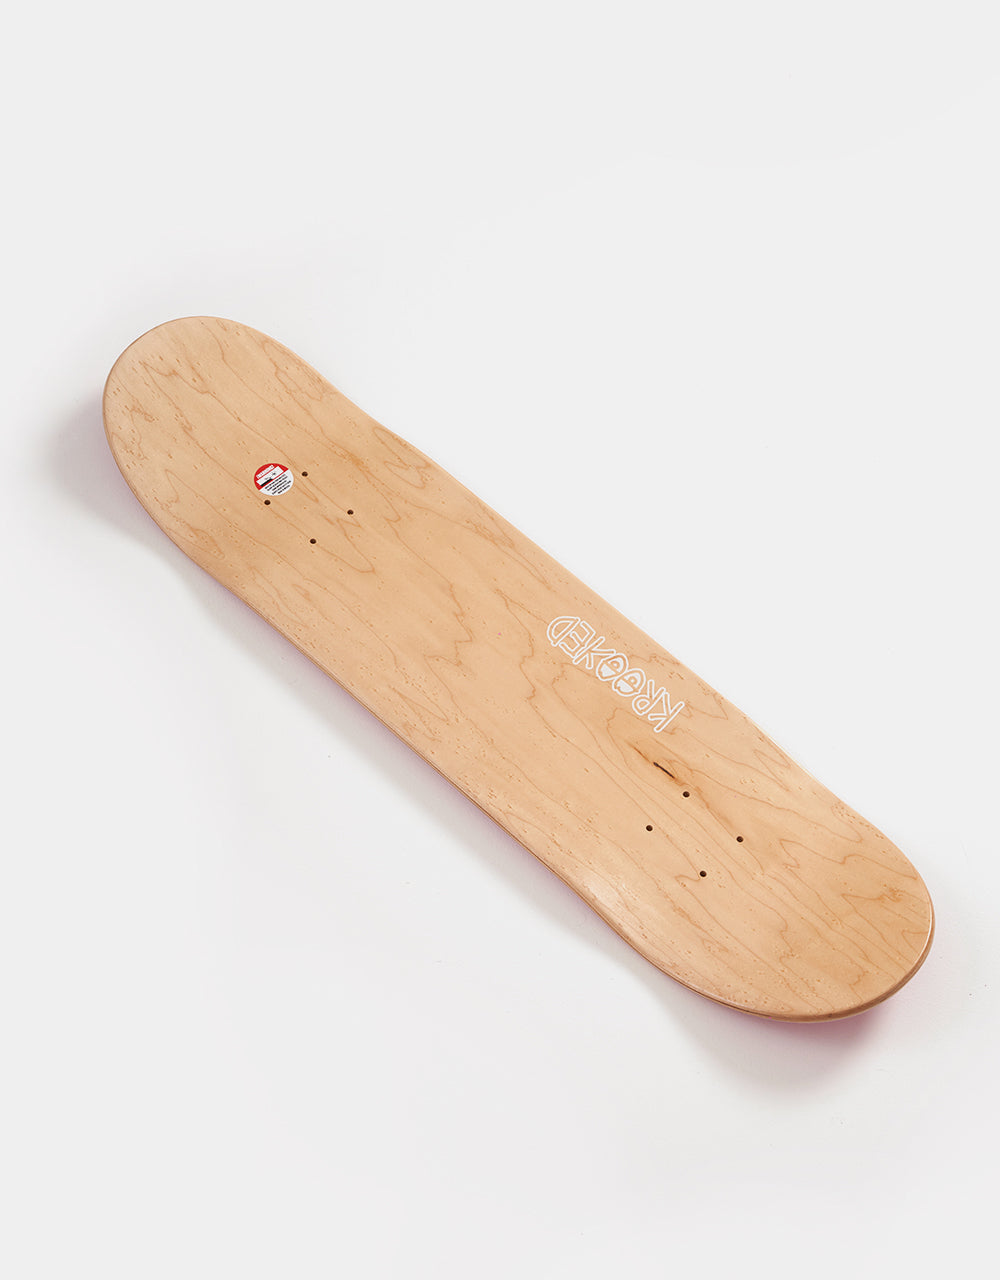 Krooked Flock Skateboard Deck - 8.06"